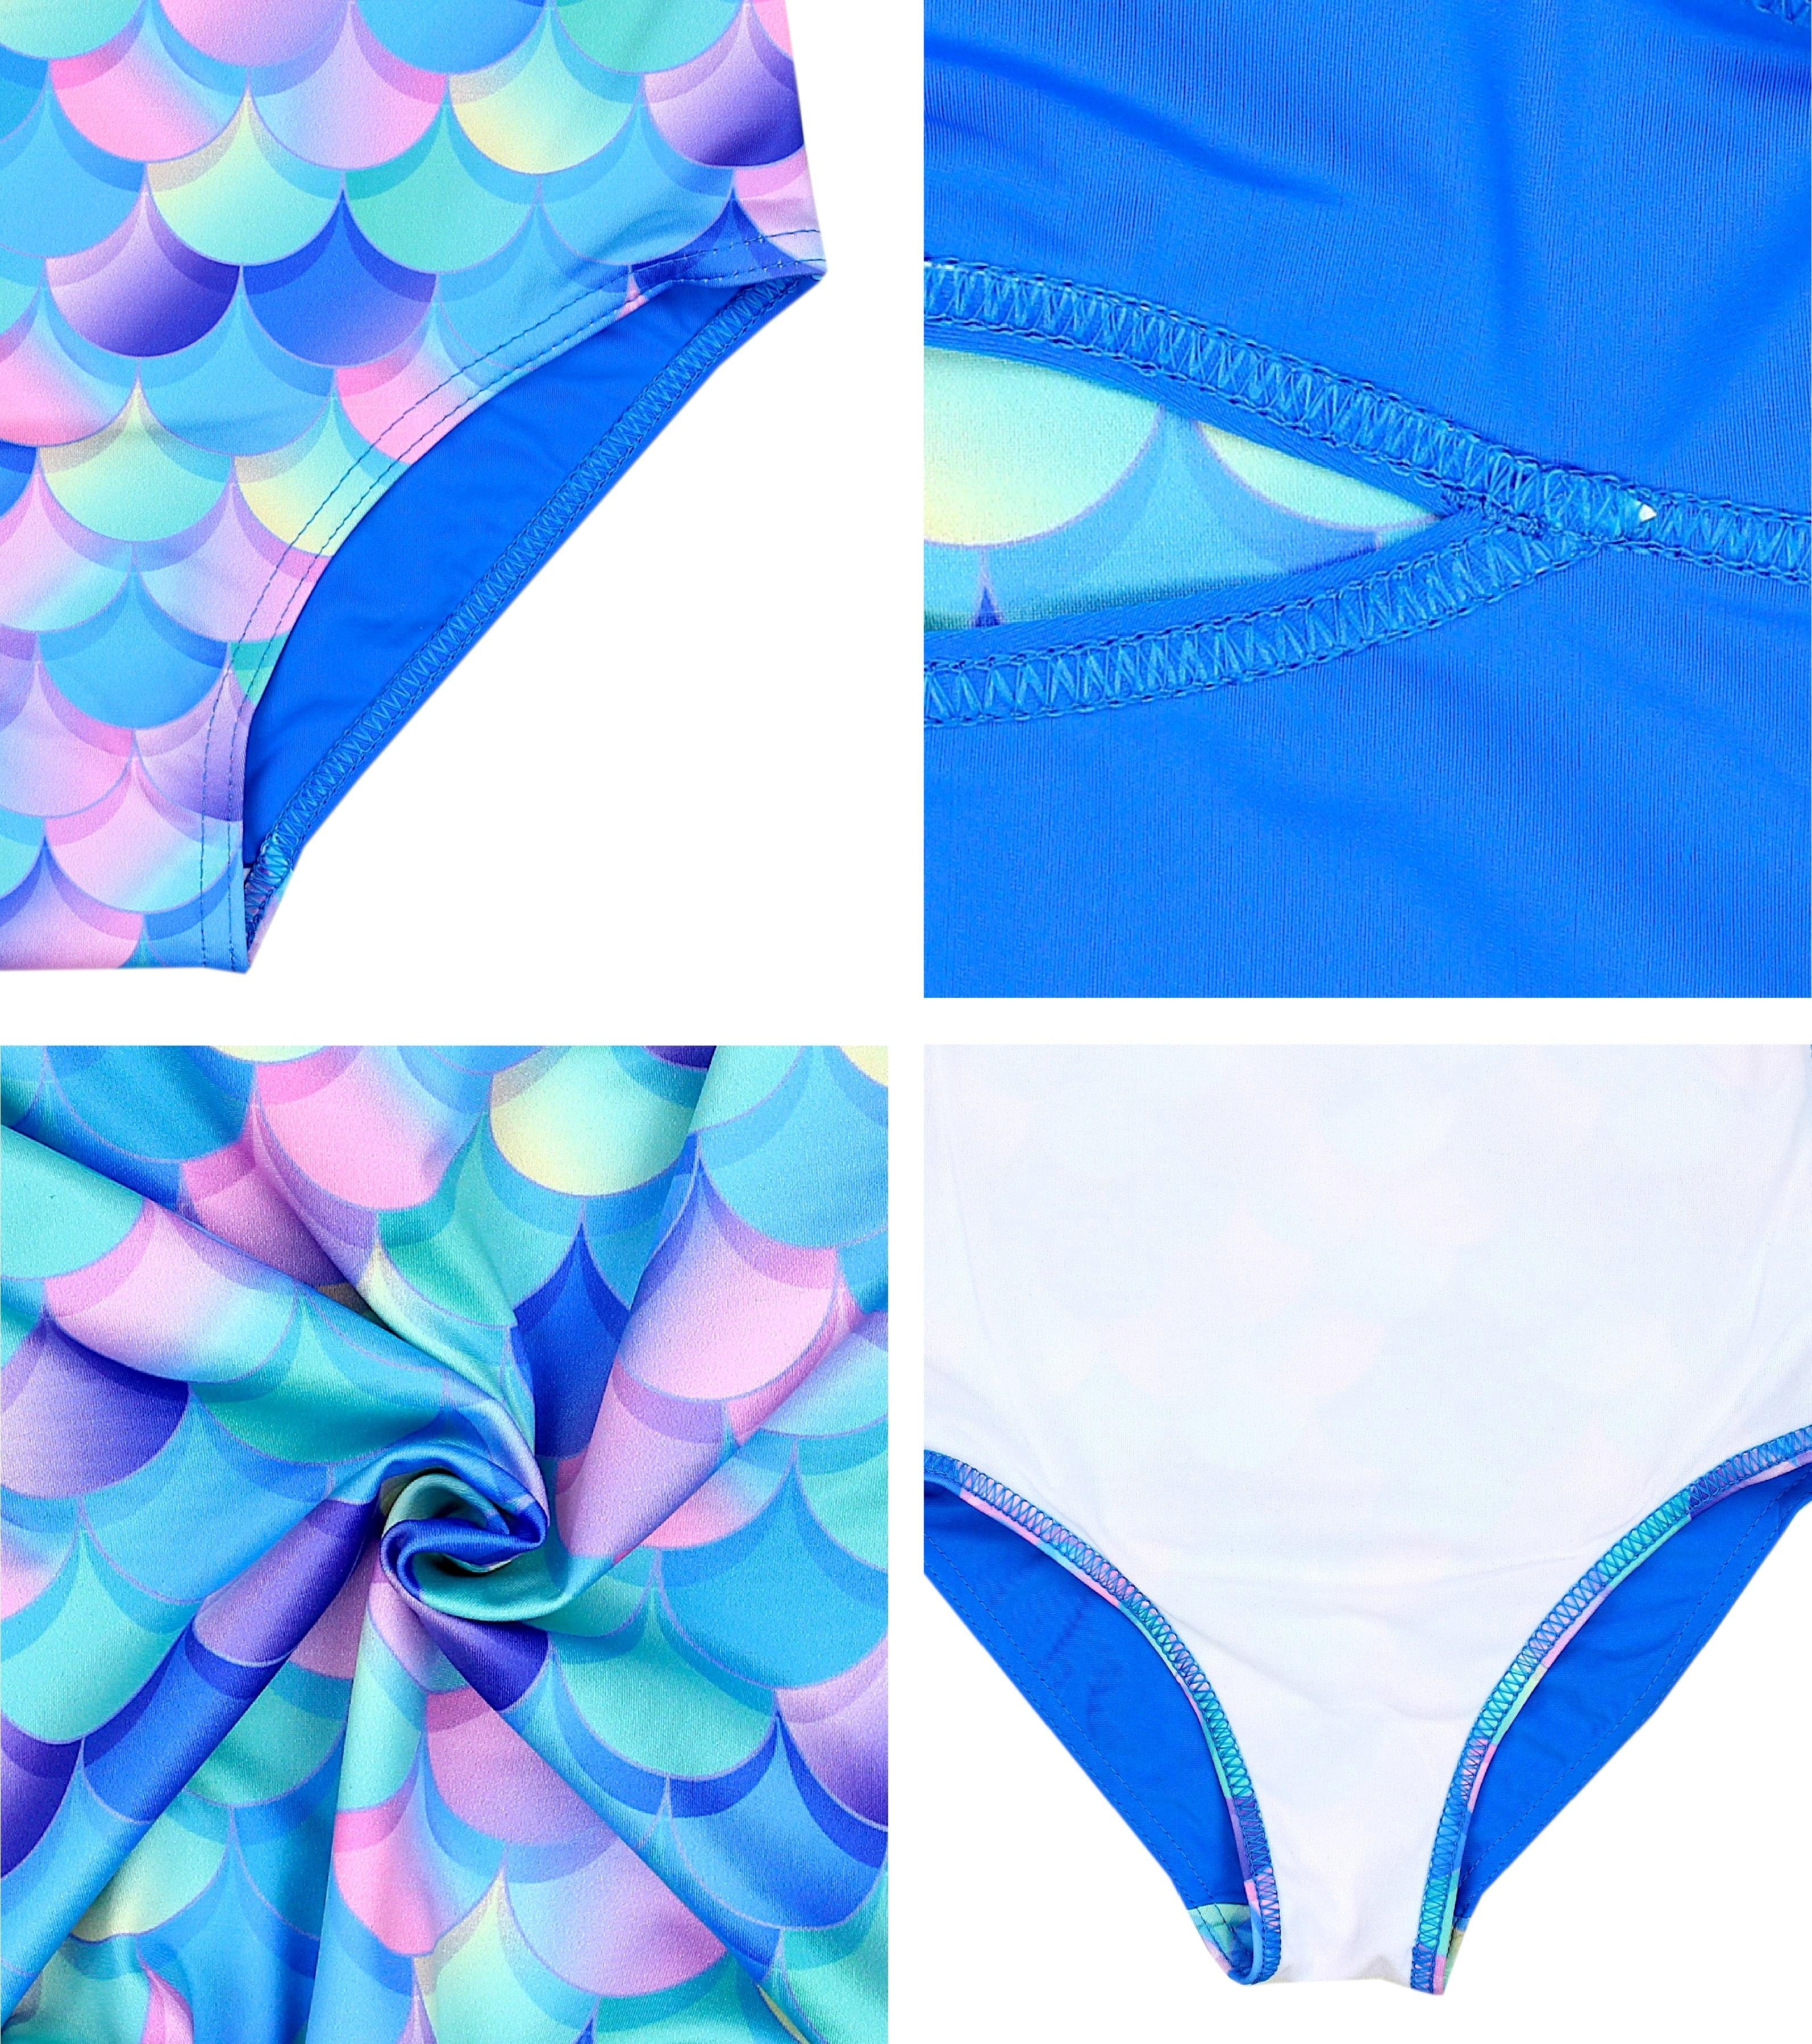 Aquarti Badeanzug Ringerrücken Blau mit Print Aquarti Mädchen Rosa / Violett Meerjungfrau Badeanzug 